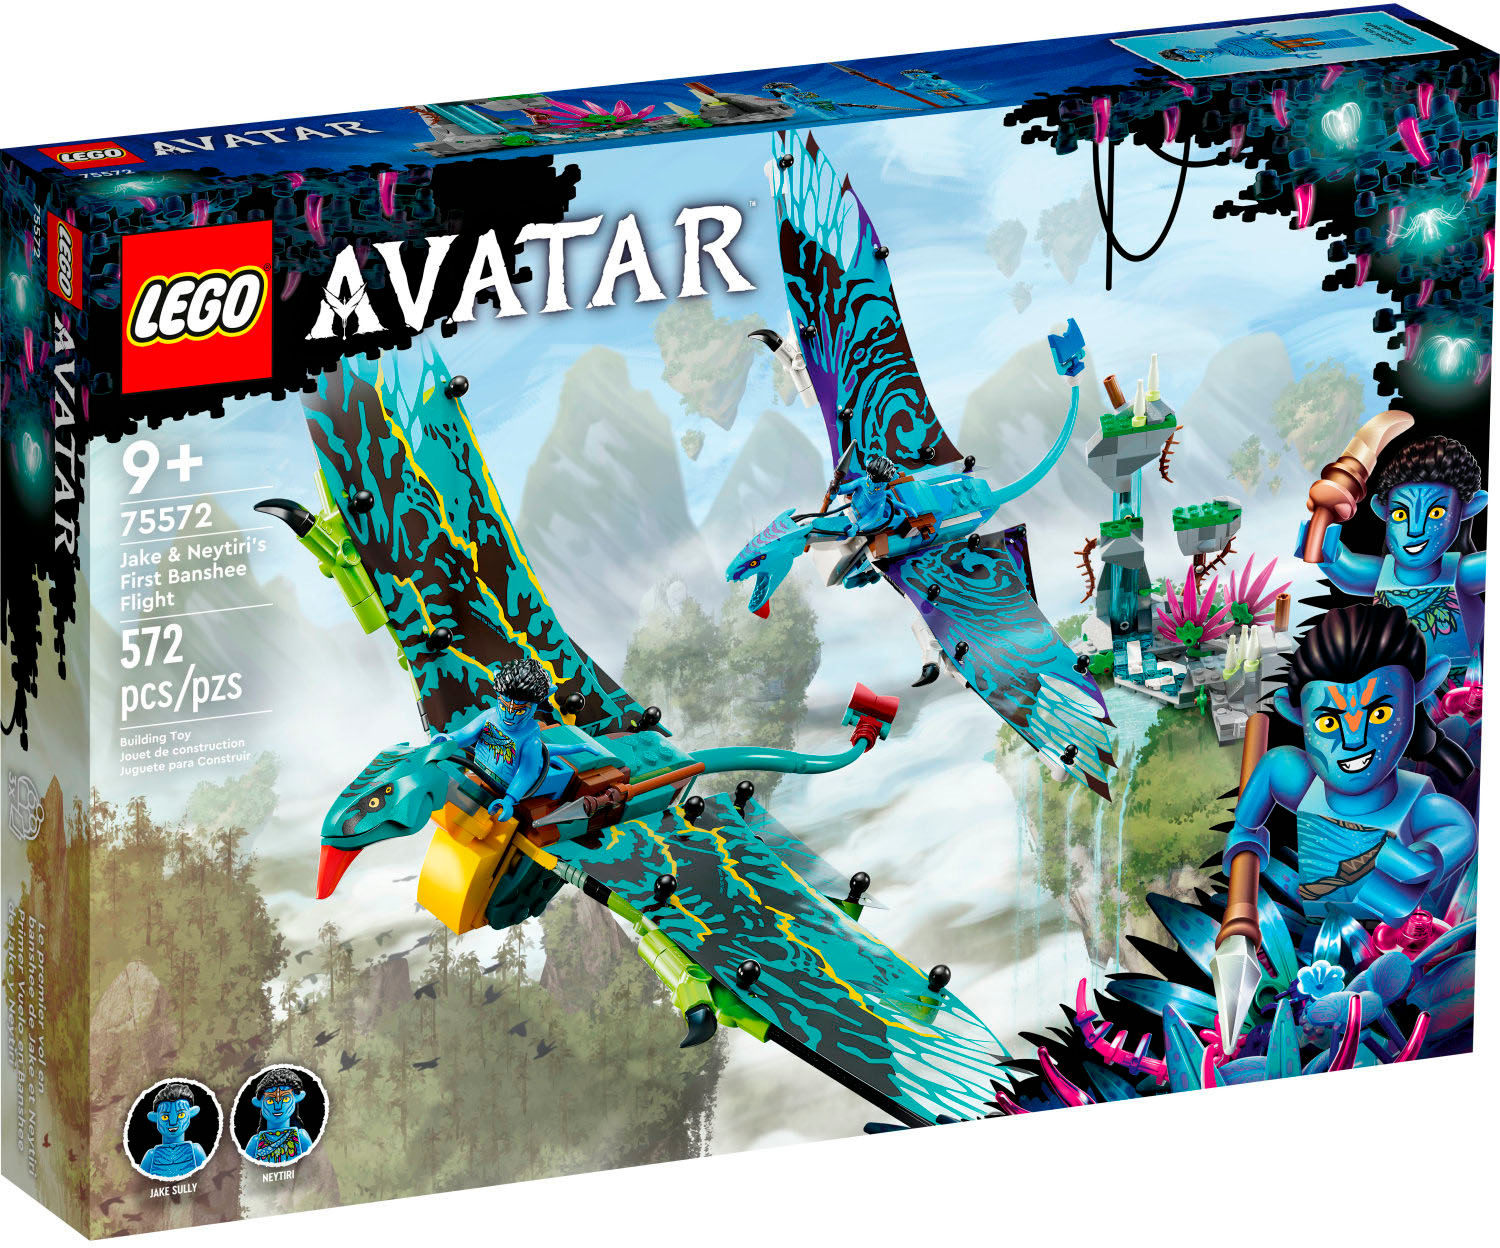 plejeforældre Børnecenter Fysik LEGO Avatar Jake & Neytiri's First Banshee Flight 75572 6332831 - Best Buy